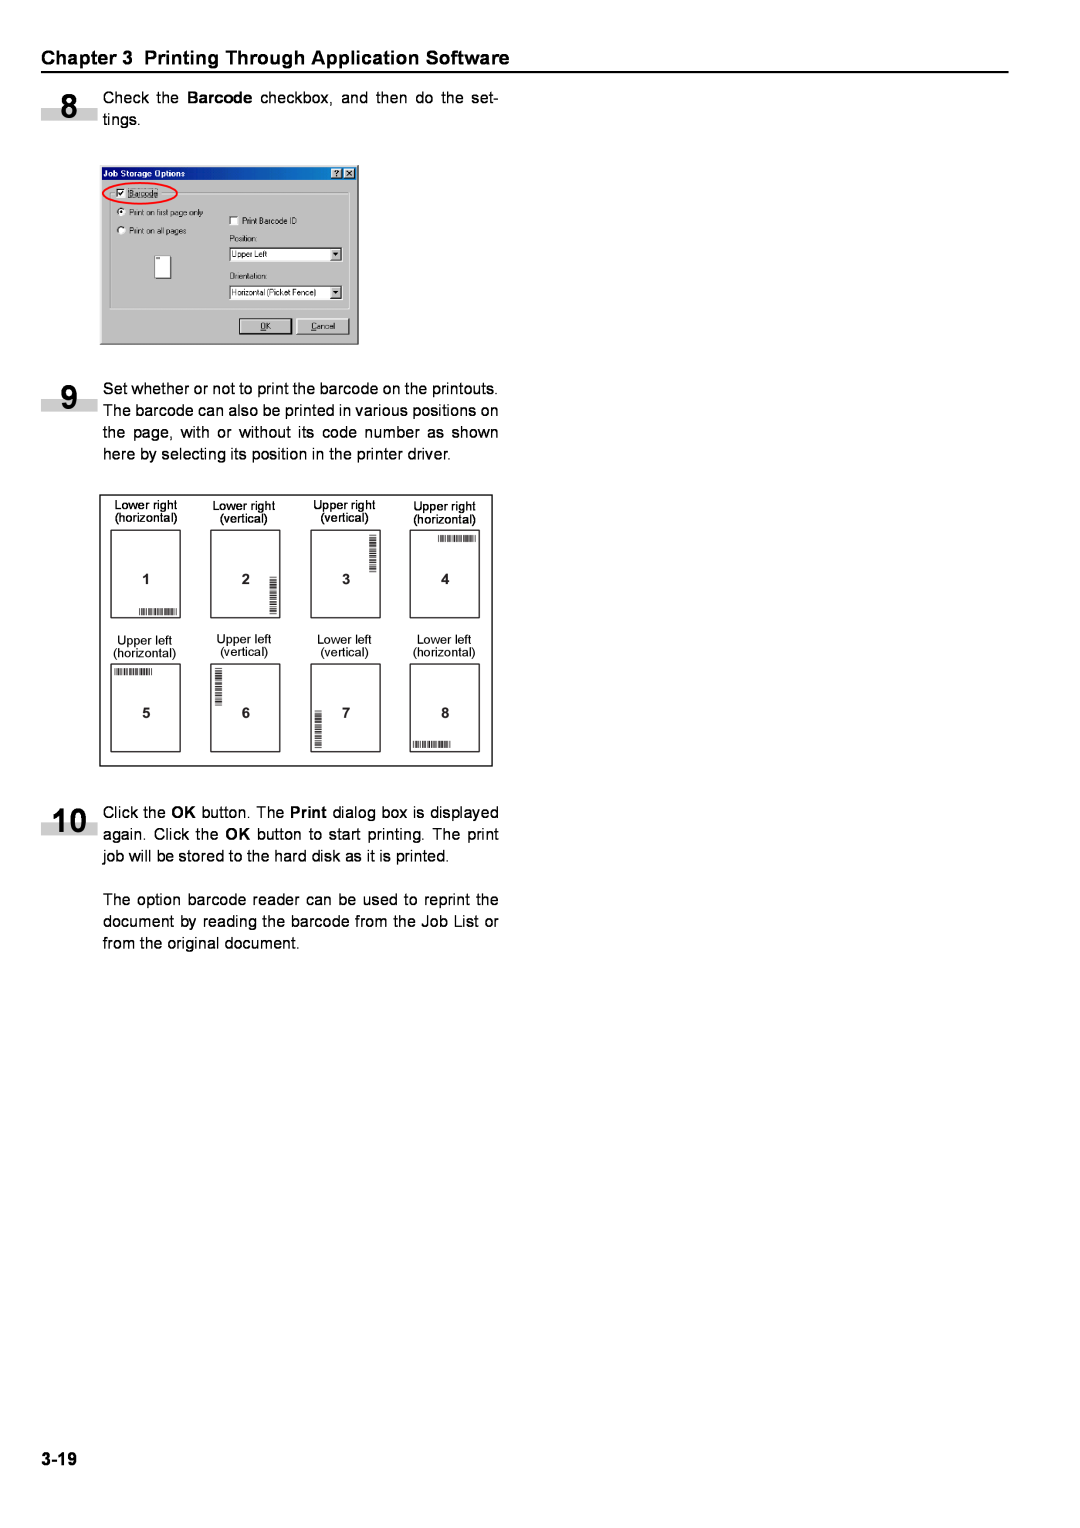 Kyocera S-9100DN manual Printing Through Application Software, 3-19, horizontal, vertical, Upper left, Lower left 